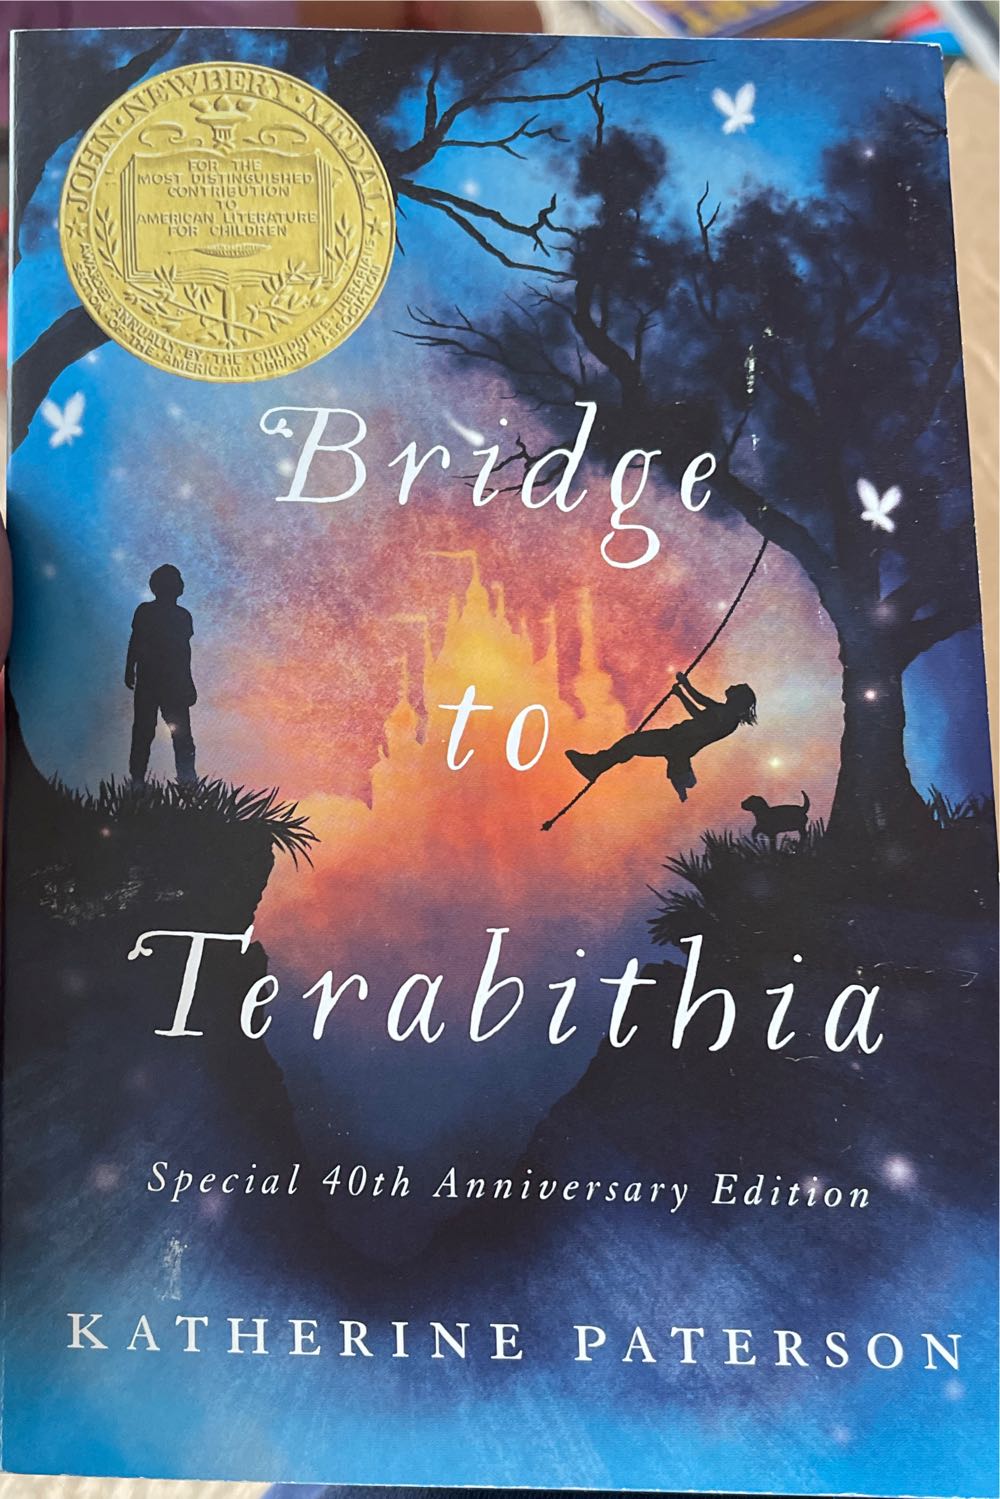 Bridge to Terabithia - Katherine Paterson (Harper Collins - Paperback) book collectible [Barcode 9780064401845] - Main Image 3